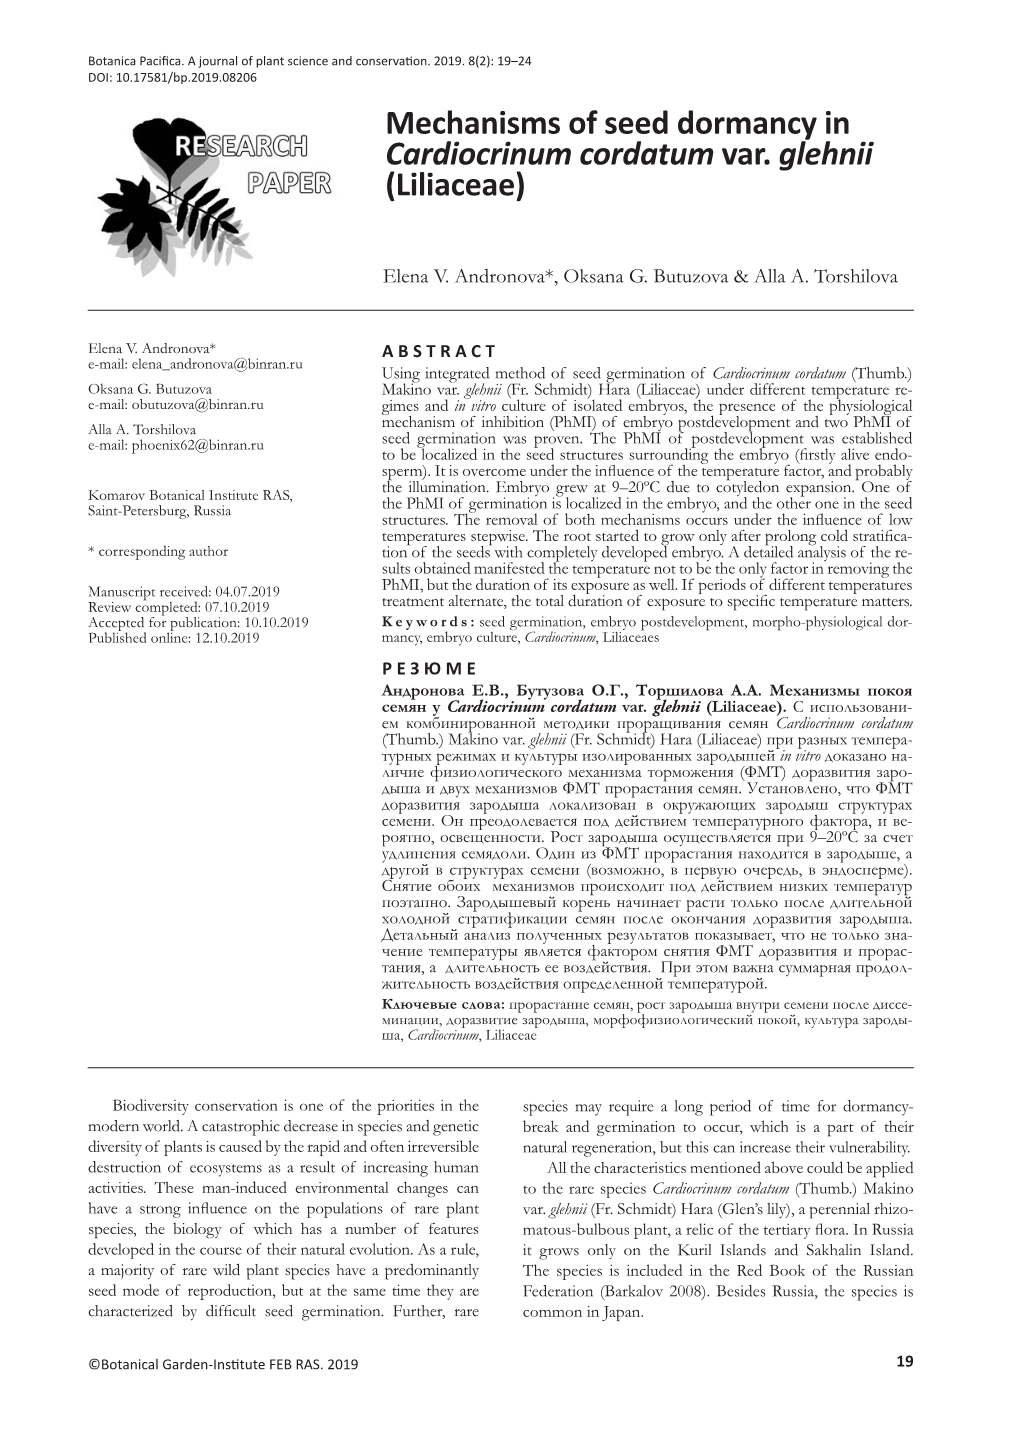 Mechanisms of Seed Dormancy in Cardiocrinum Cordatum Var. Glehnii (Liliaceae)